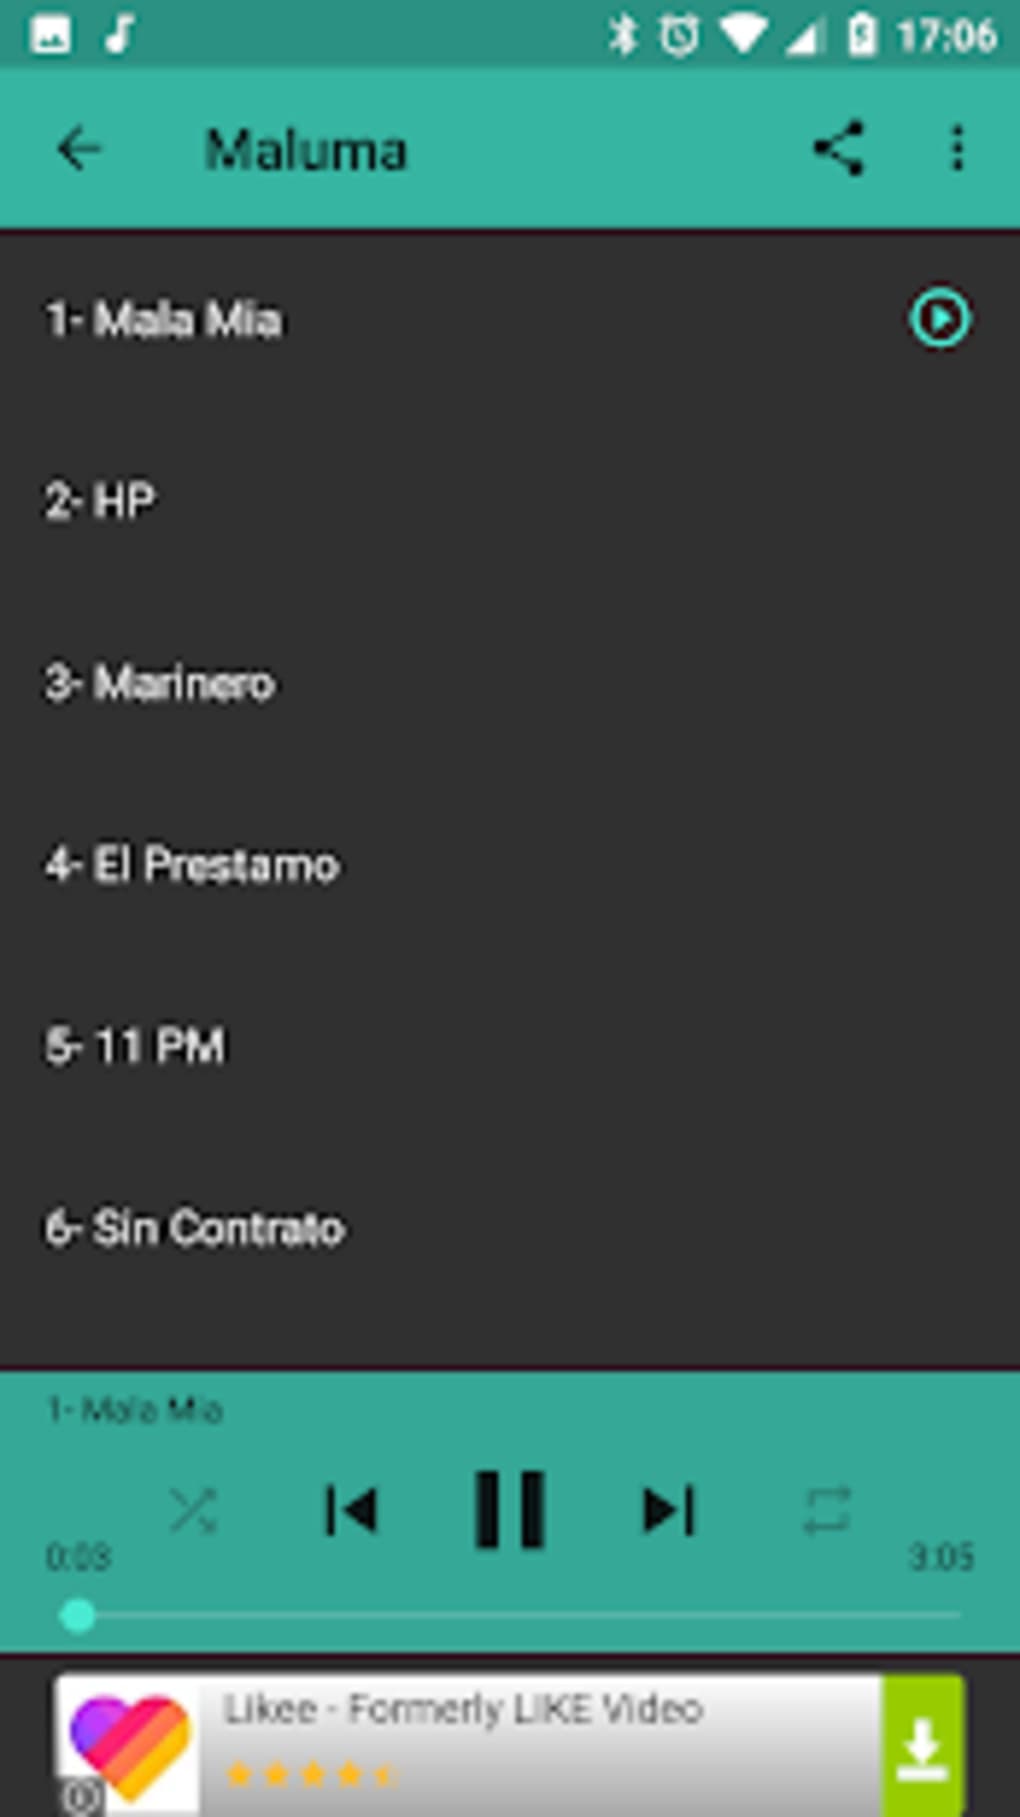 látigo champán Ladrillo Maluma mp3 Offline Best Hits APK for Android - Download